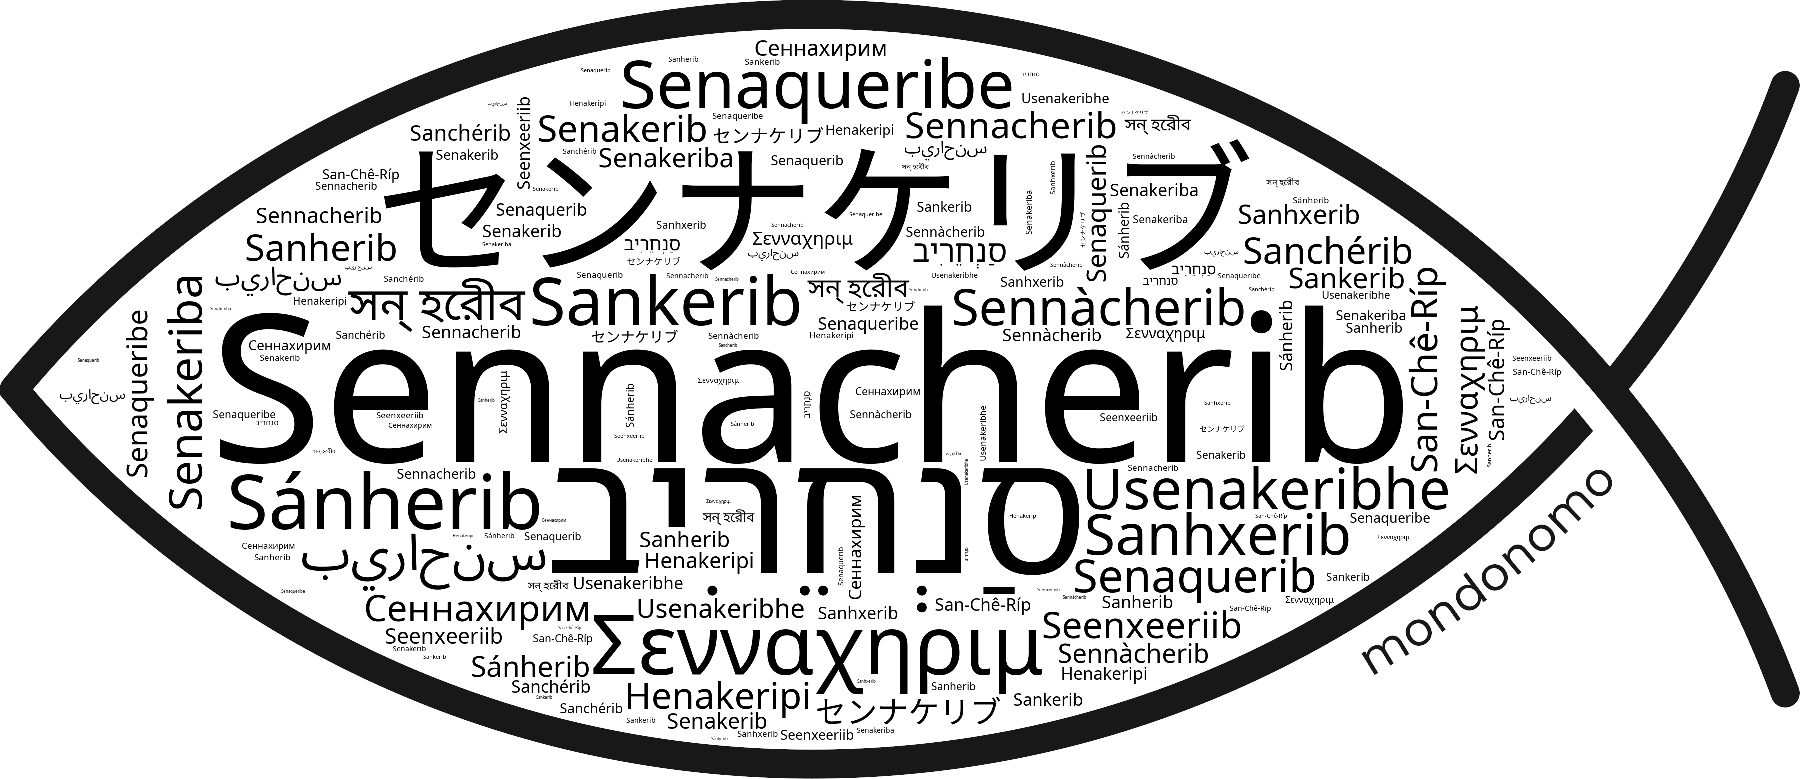 Name Sennacherib in the world's Bibles